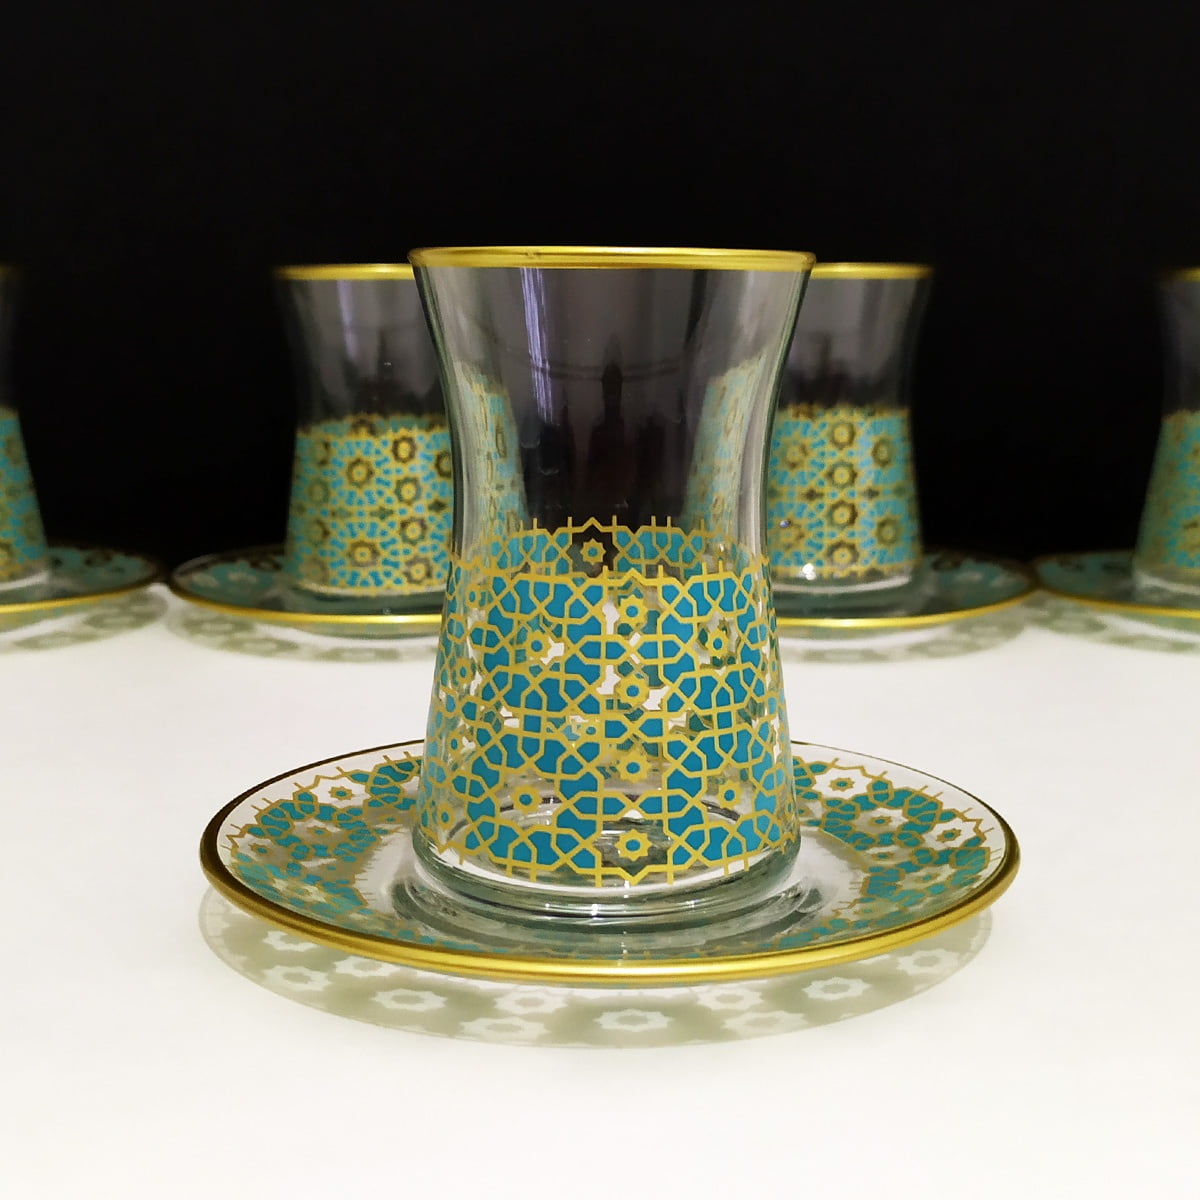 https://traditionalturk.com/wp-content/uploads/2021/06/12-pcs-pasabahce-agra-turquoise-turkish-tea-set-for-six-person-2.jpeg